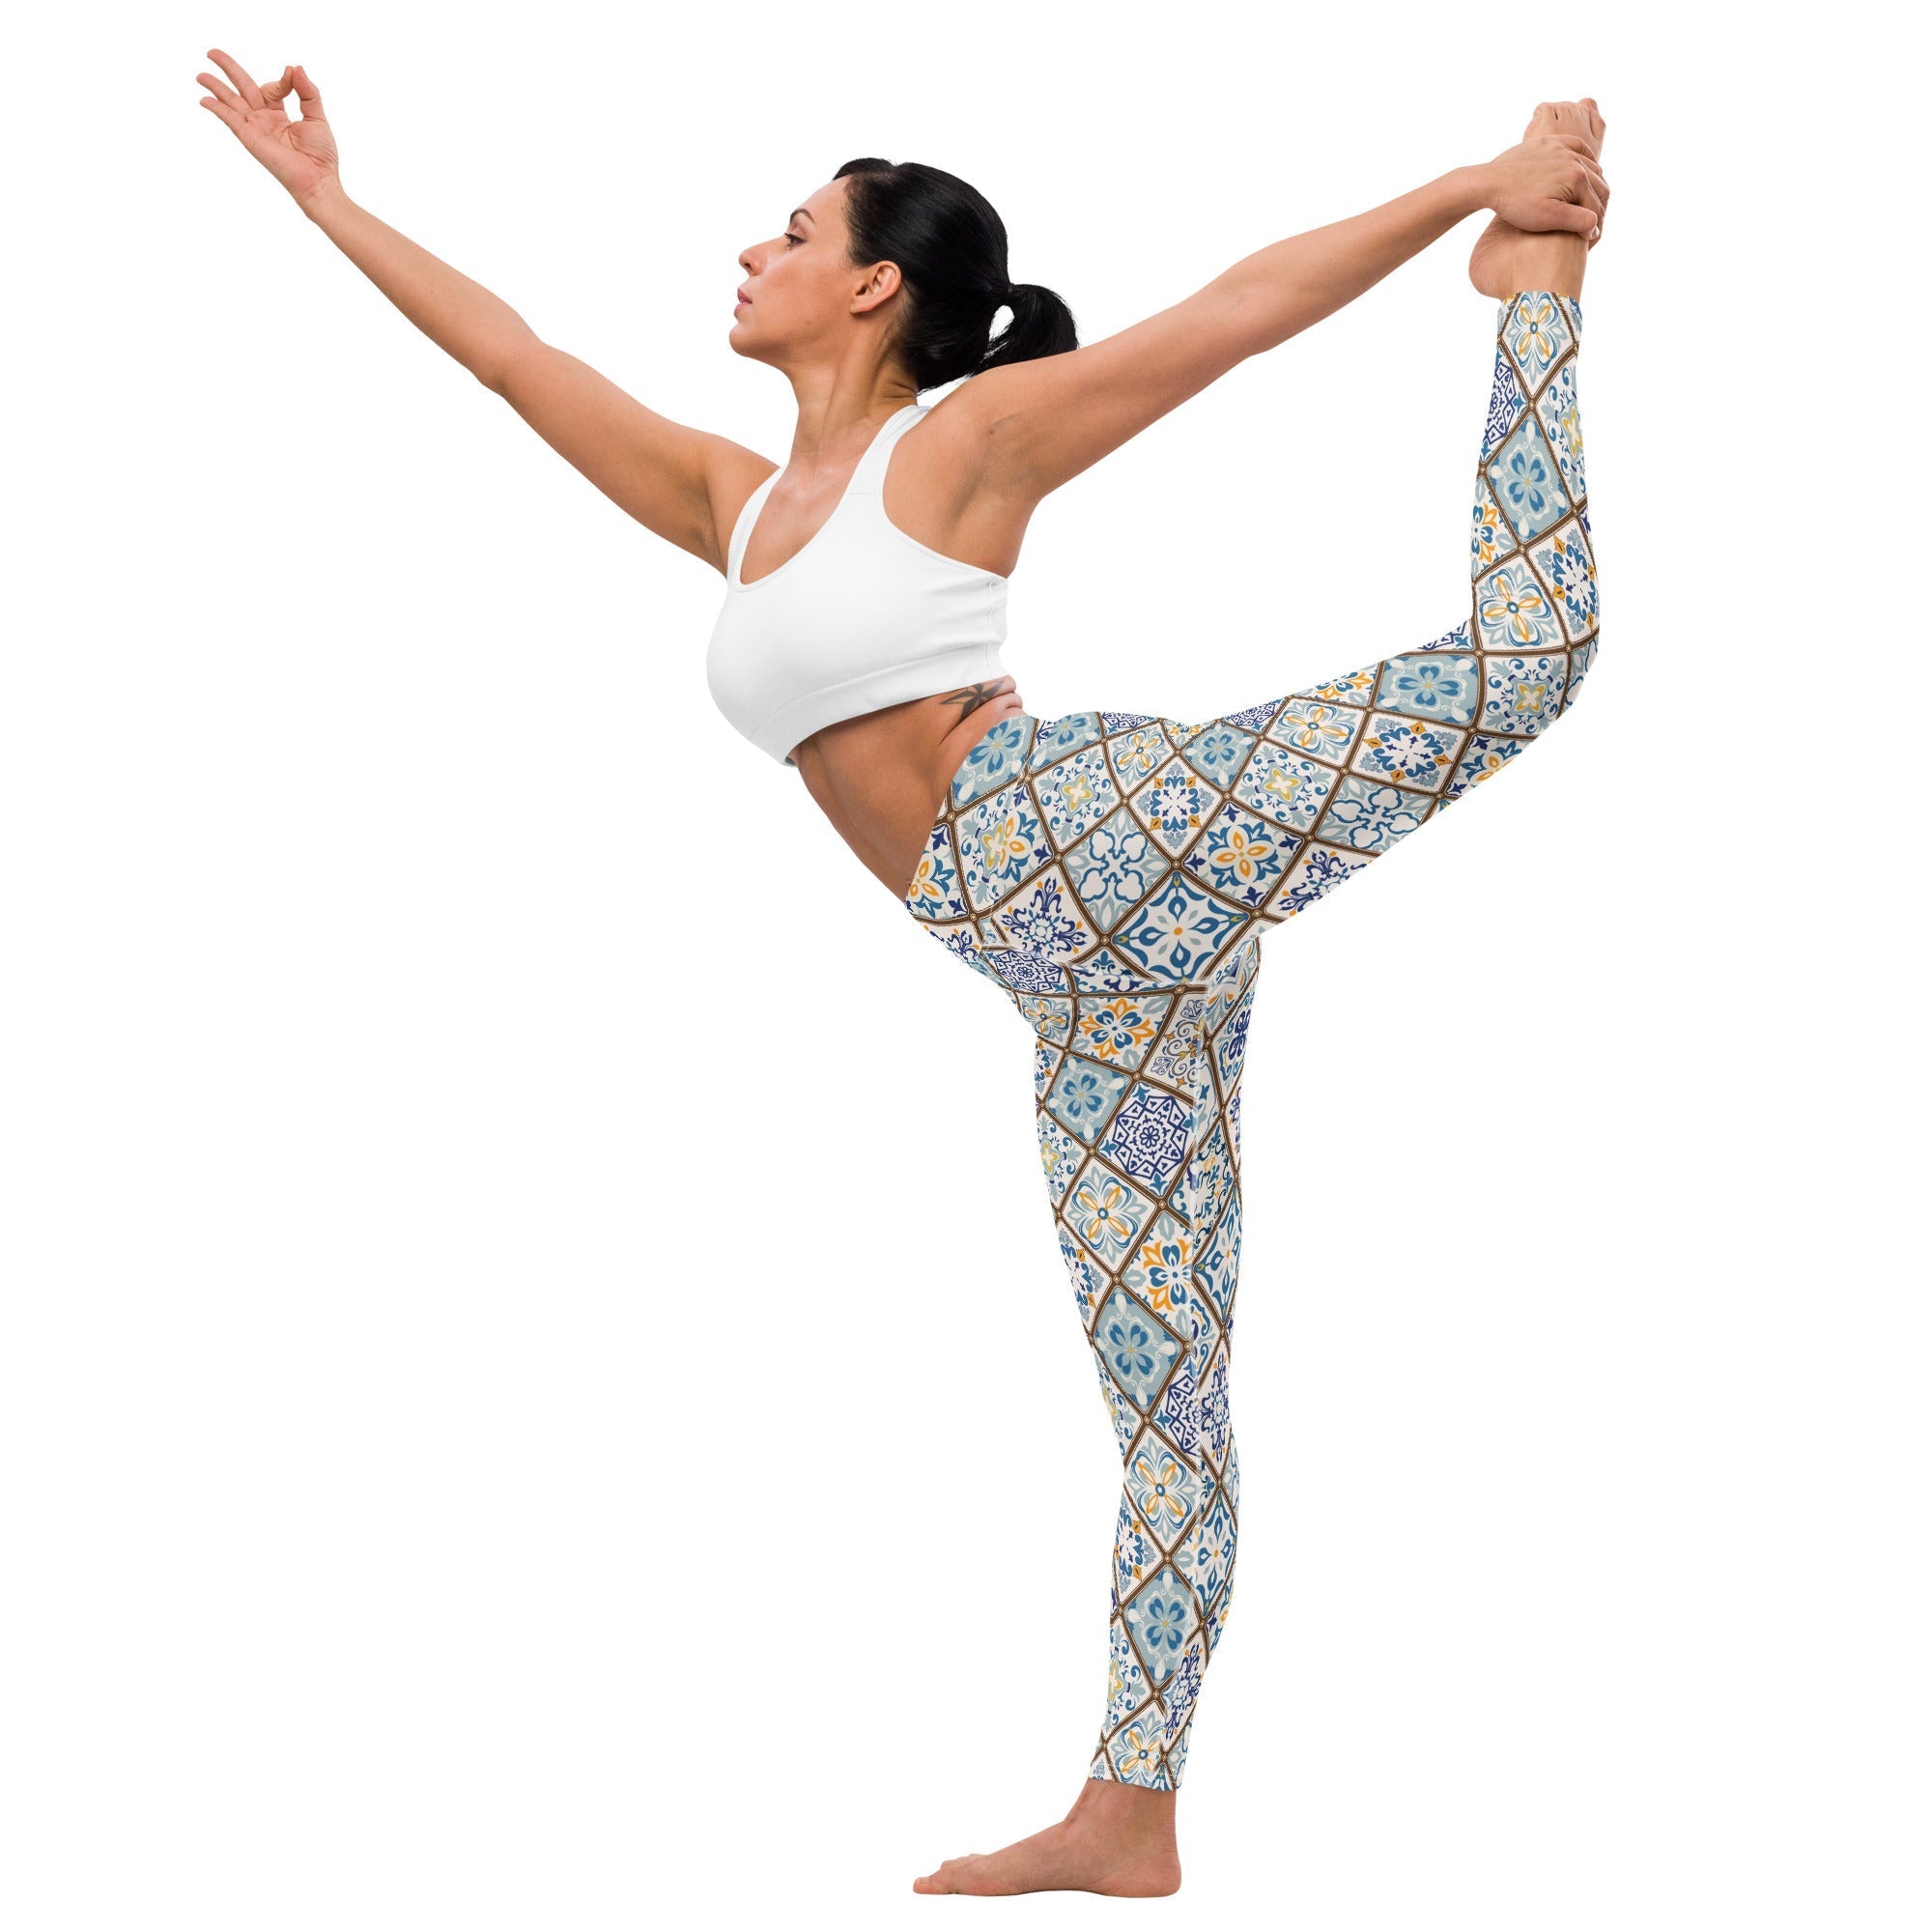 Floral Tile Print Yoga Leggings